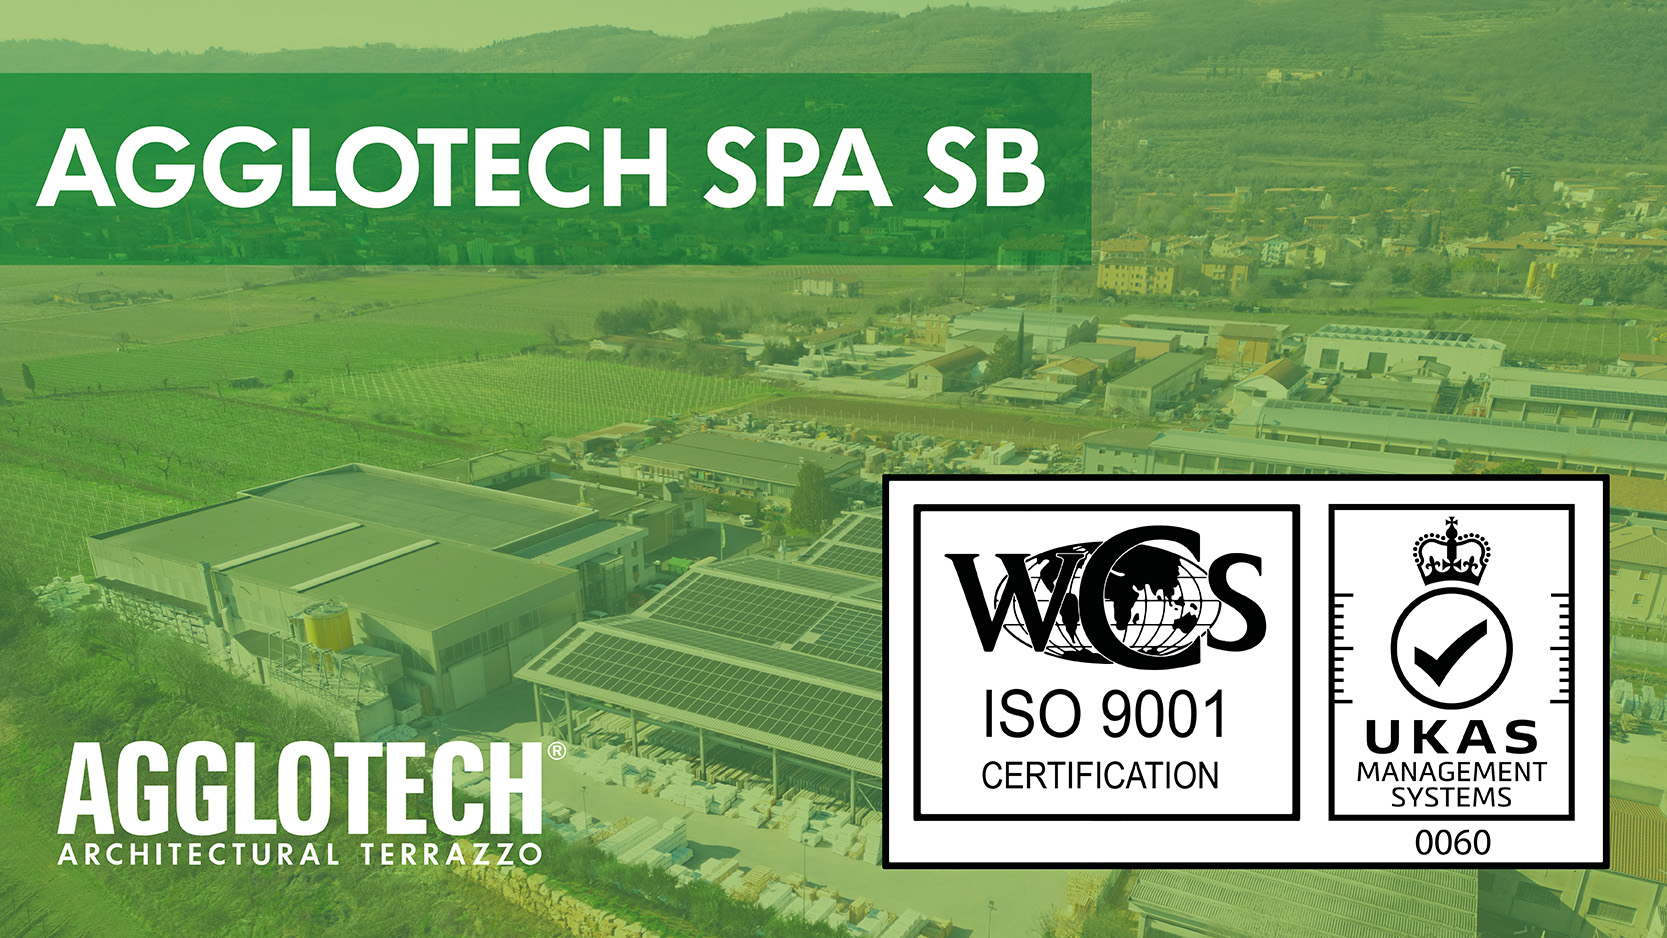 Agglotech SPA SB obtient la certification ISO 9001:2015